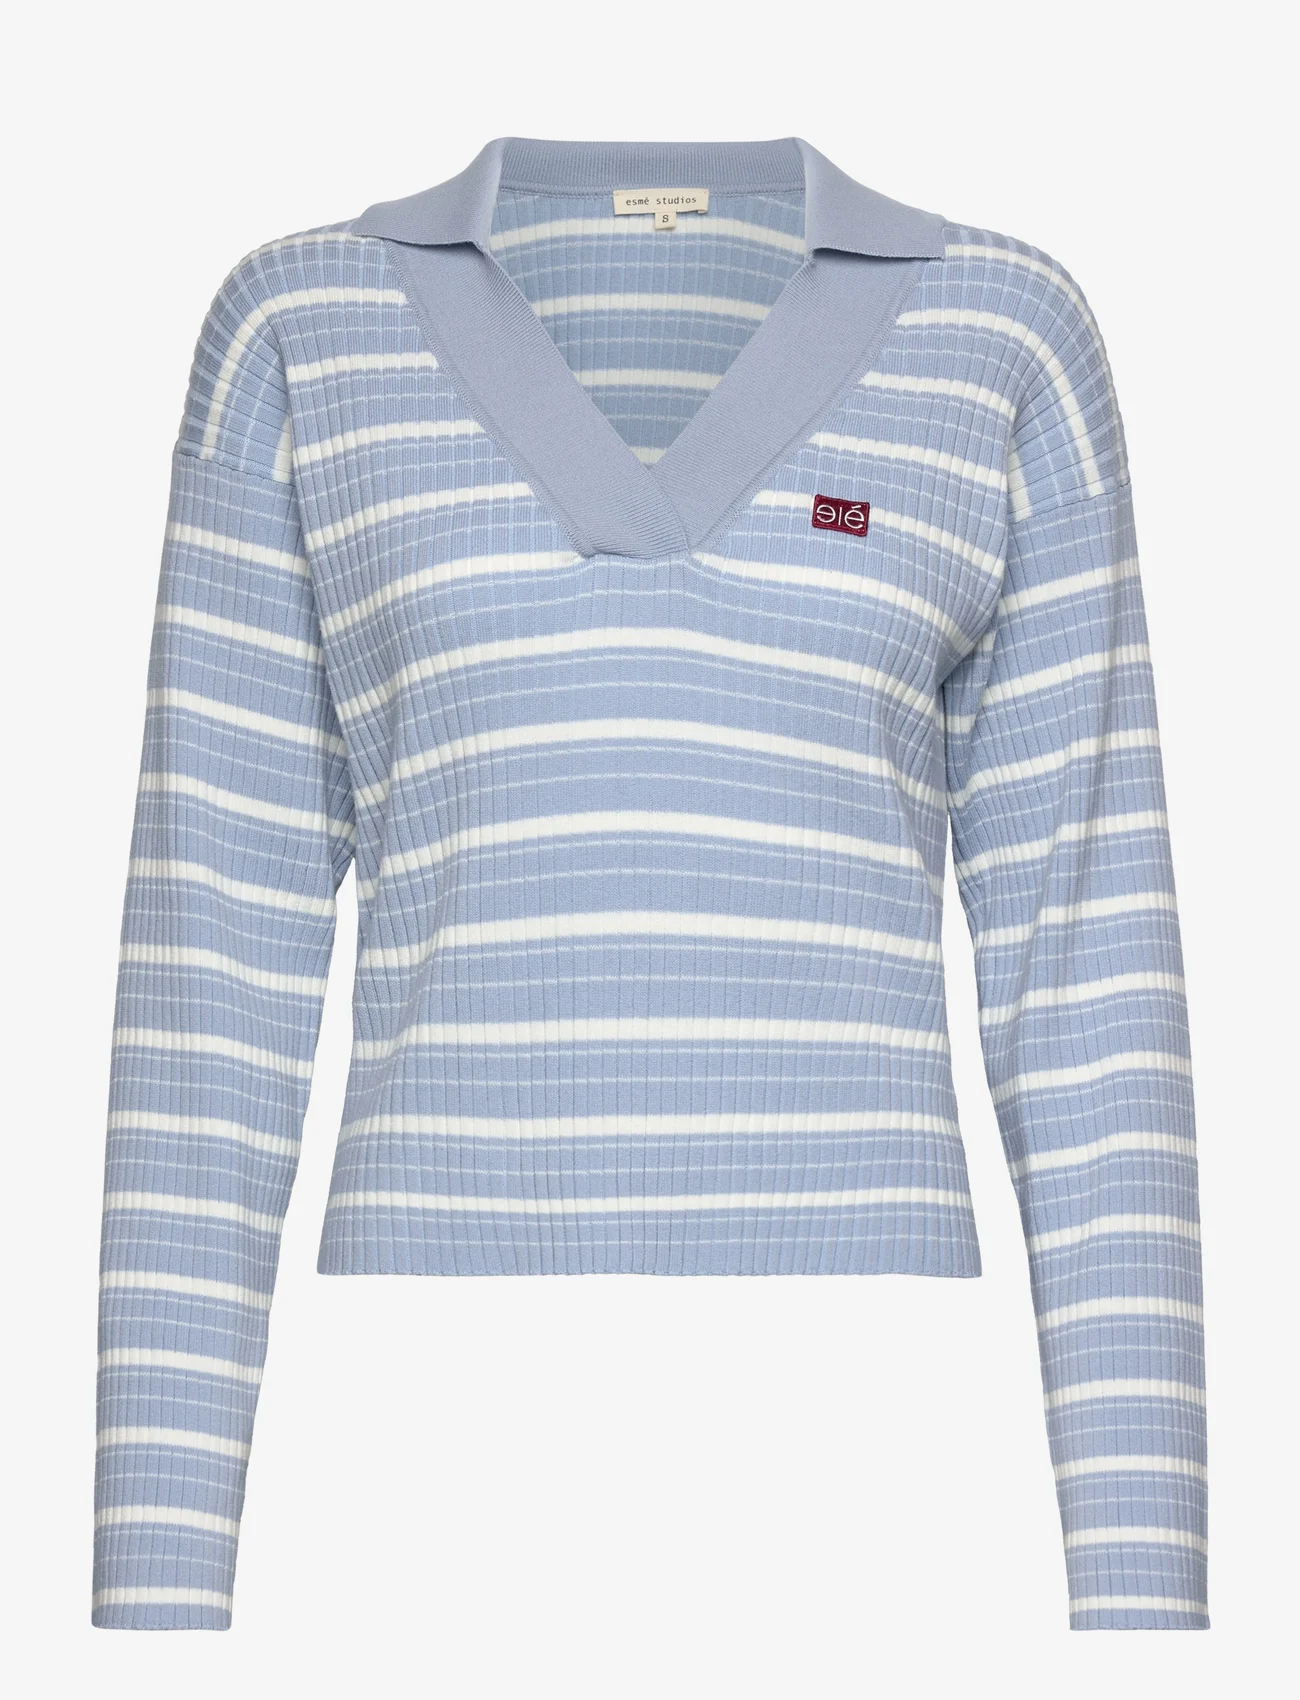 Esme Studios - ESAura Polo Knit - pullover - blue fog stripes - 0